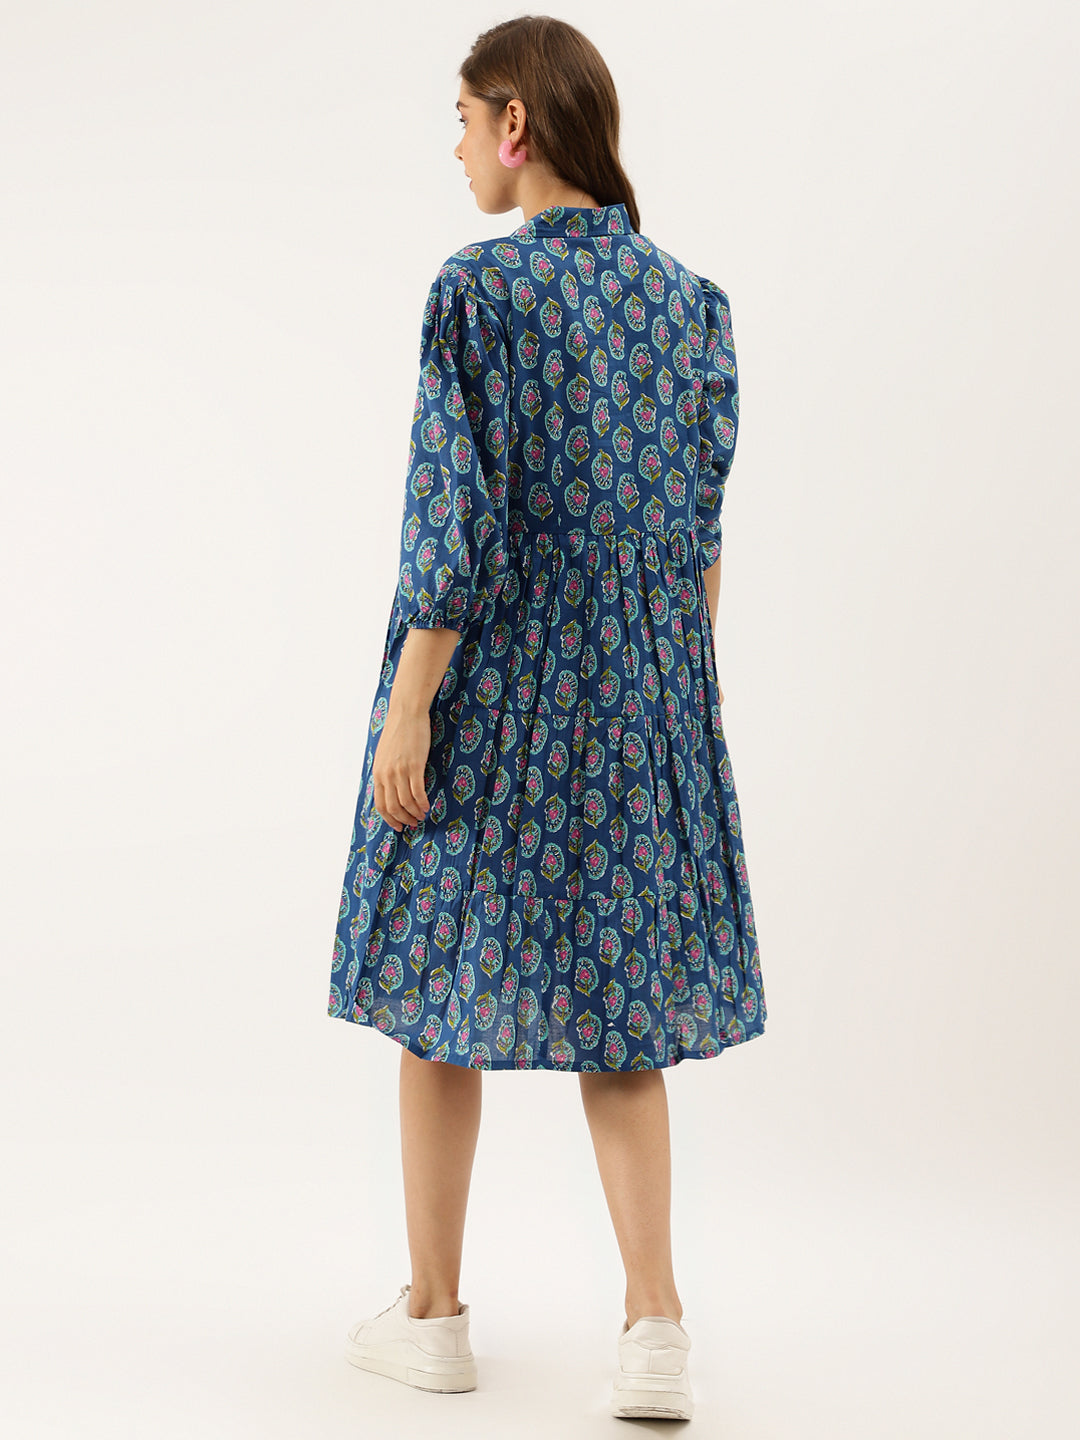 Divena Blue Paisley Printed Cotton Dress for Women